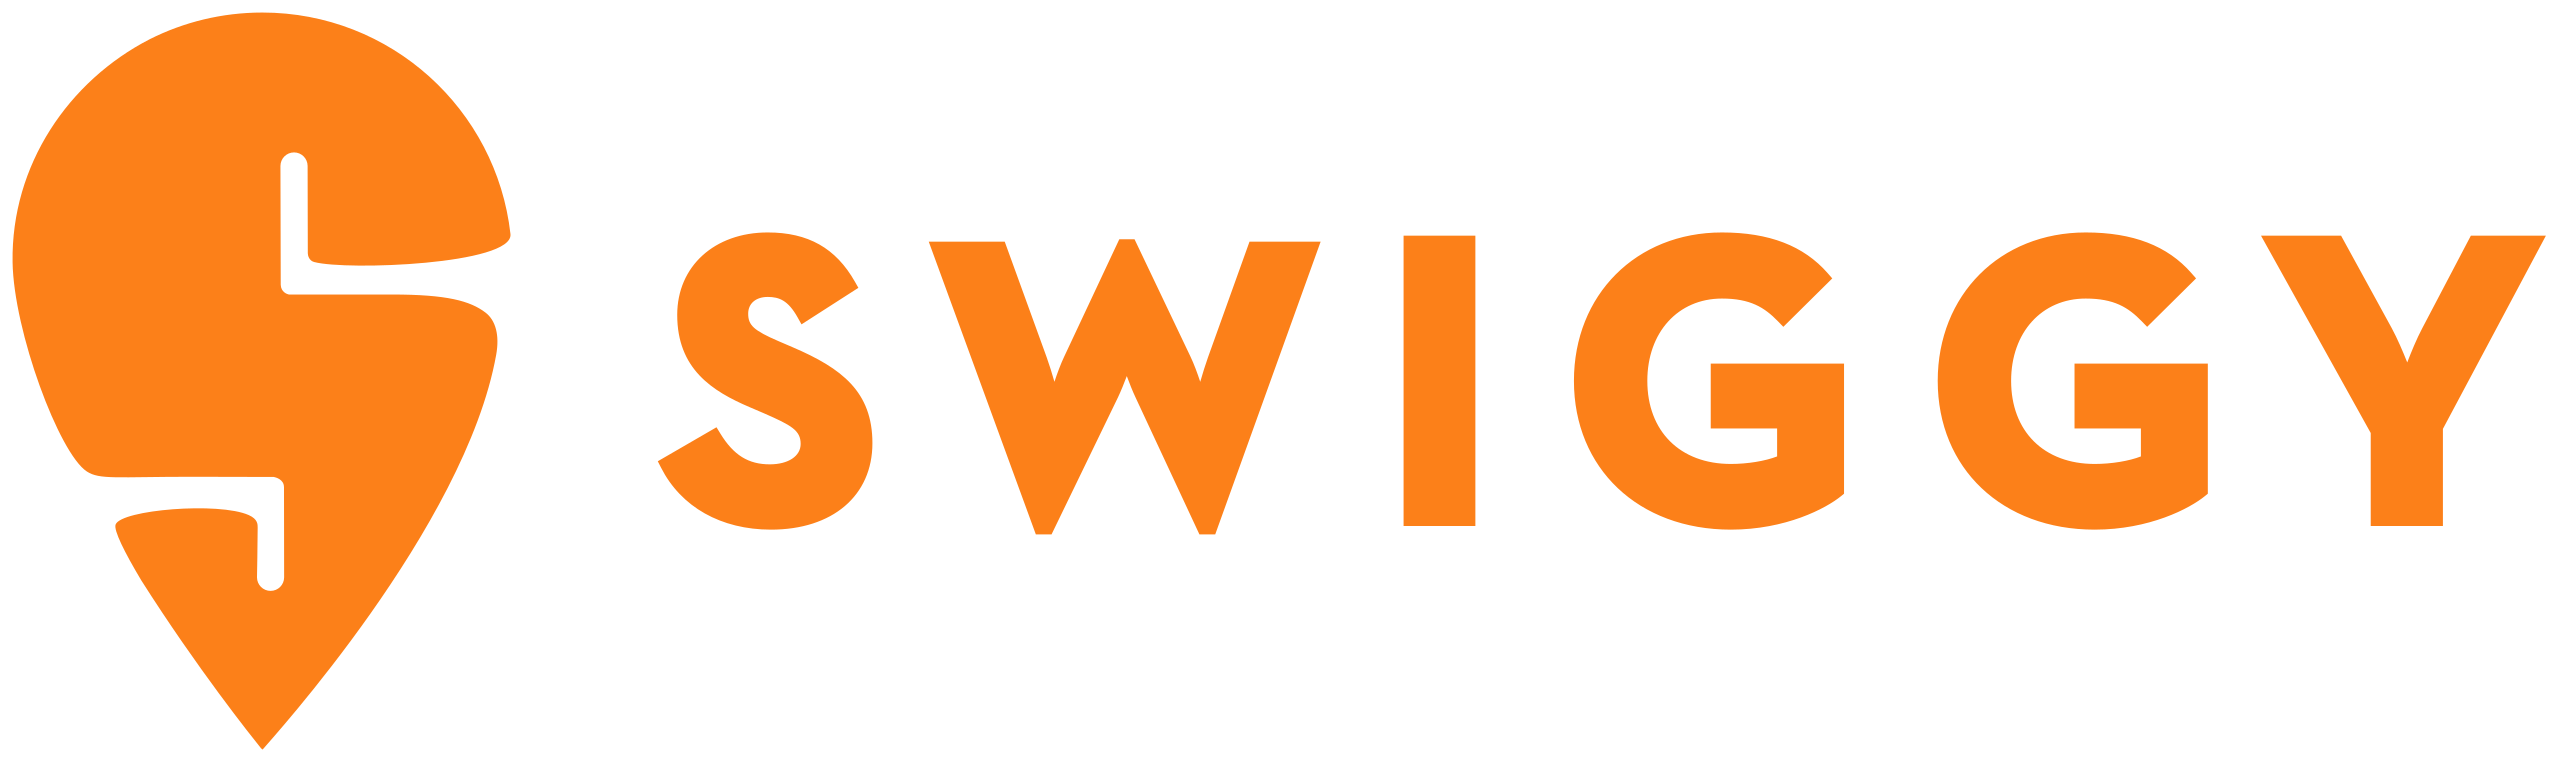 Swiggy logo.svg